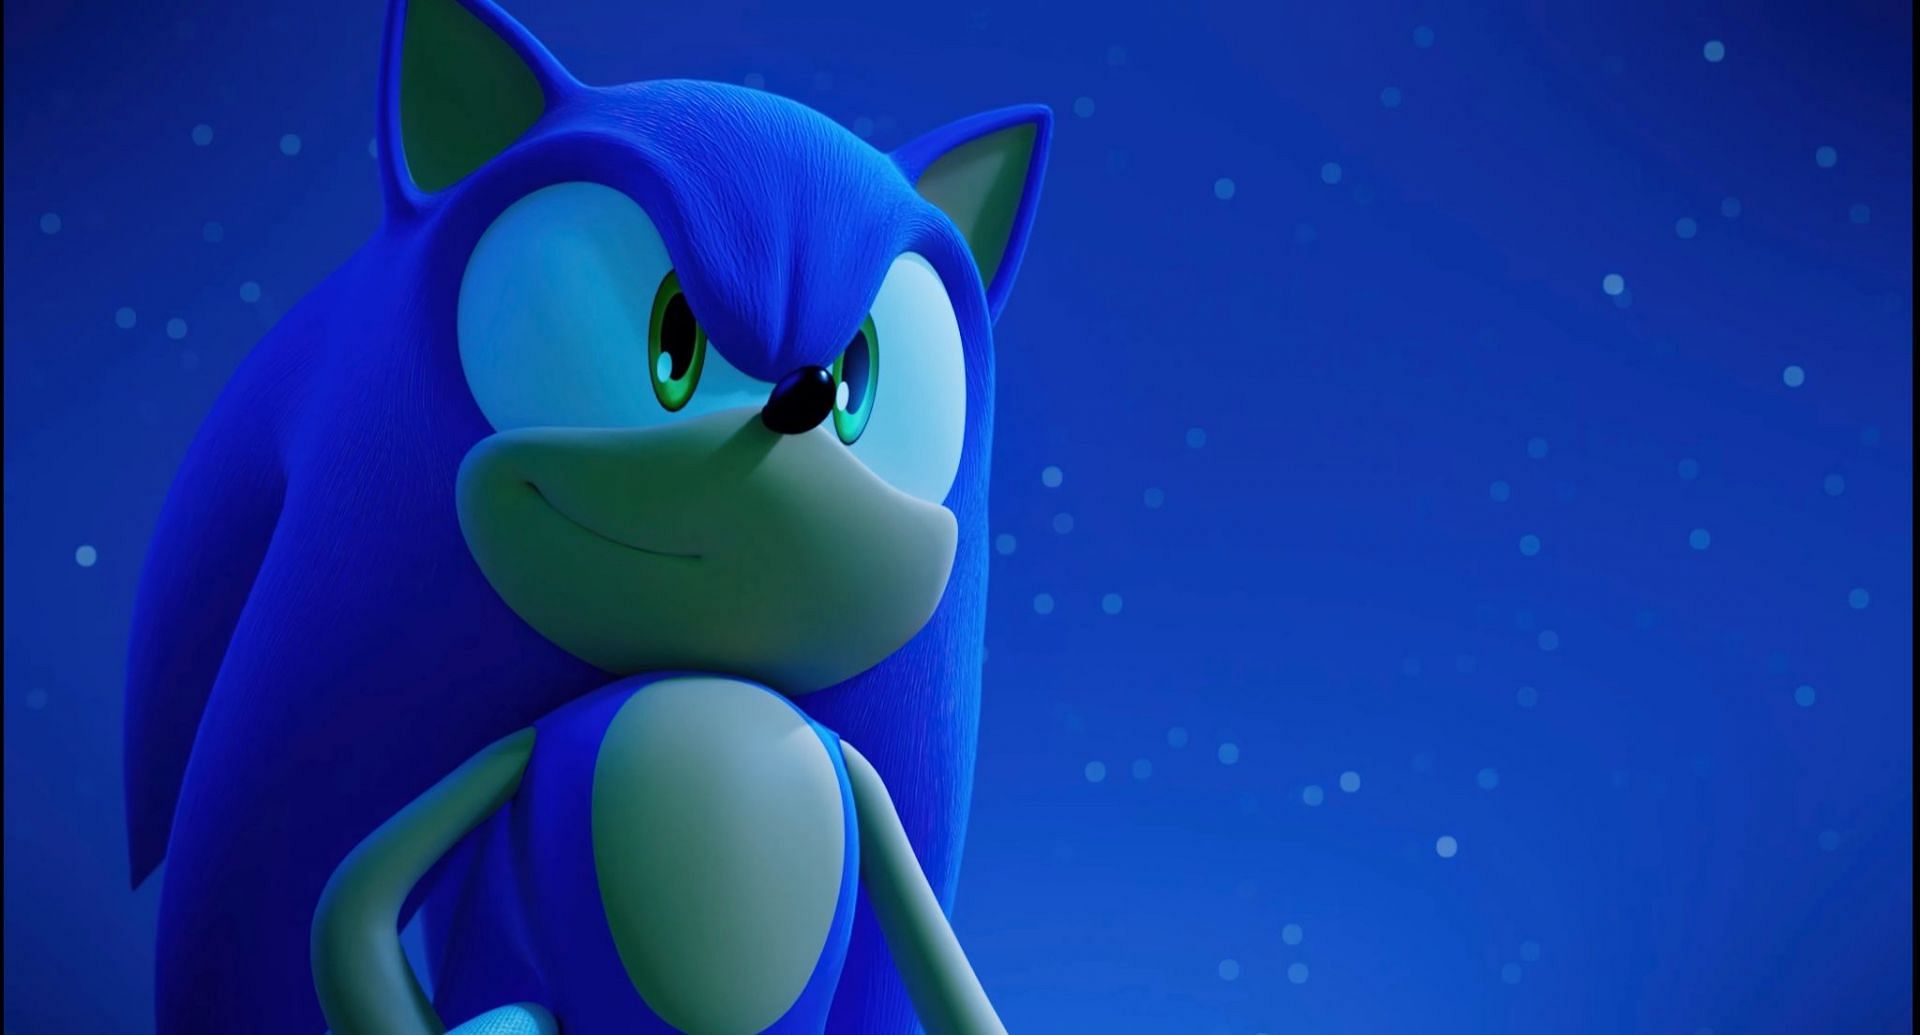 Sonic returns with style (Image via Sega)